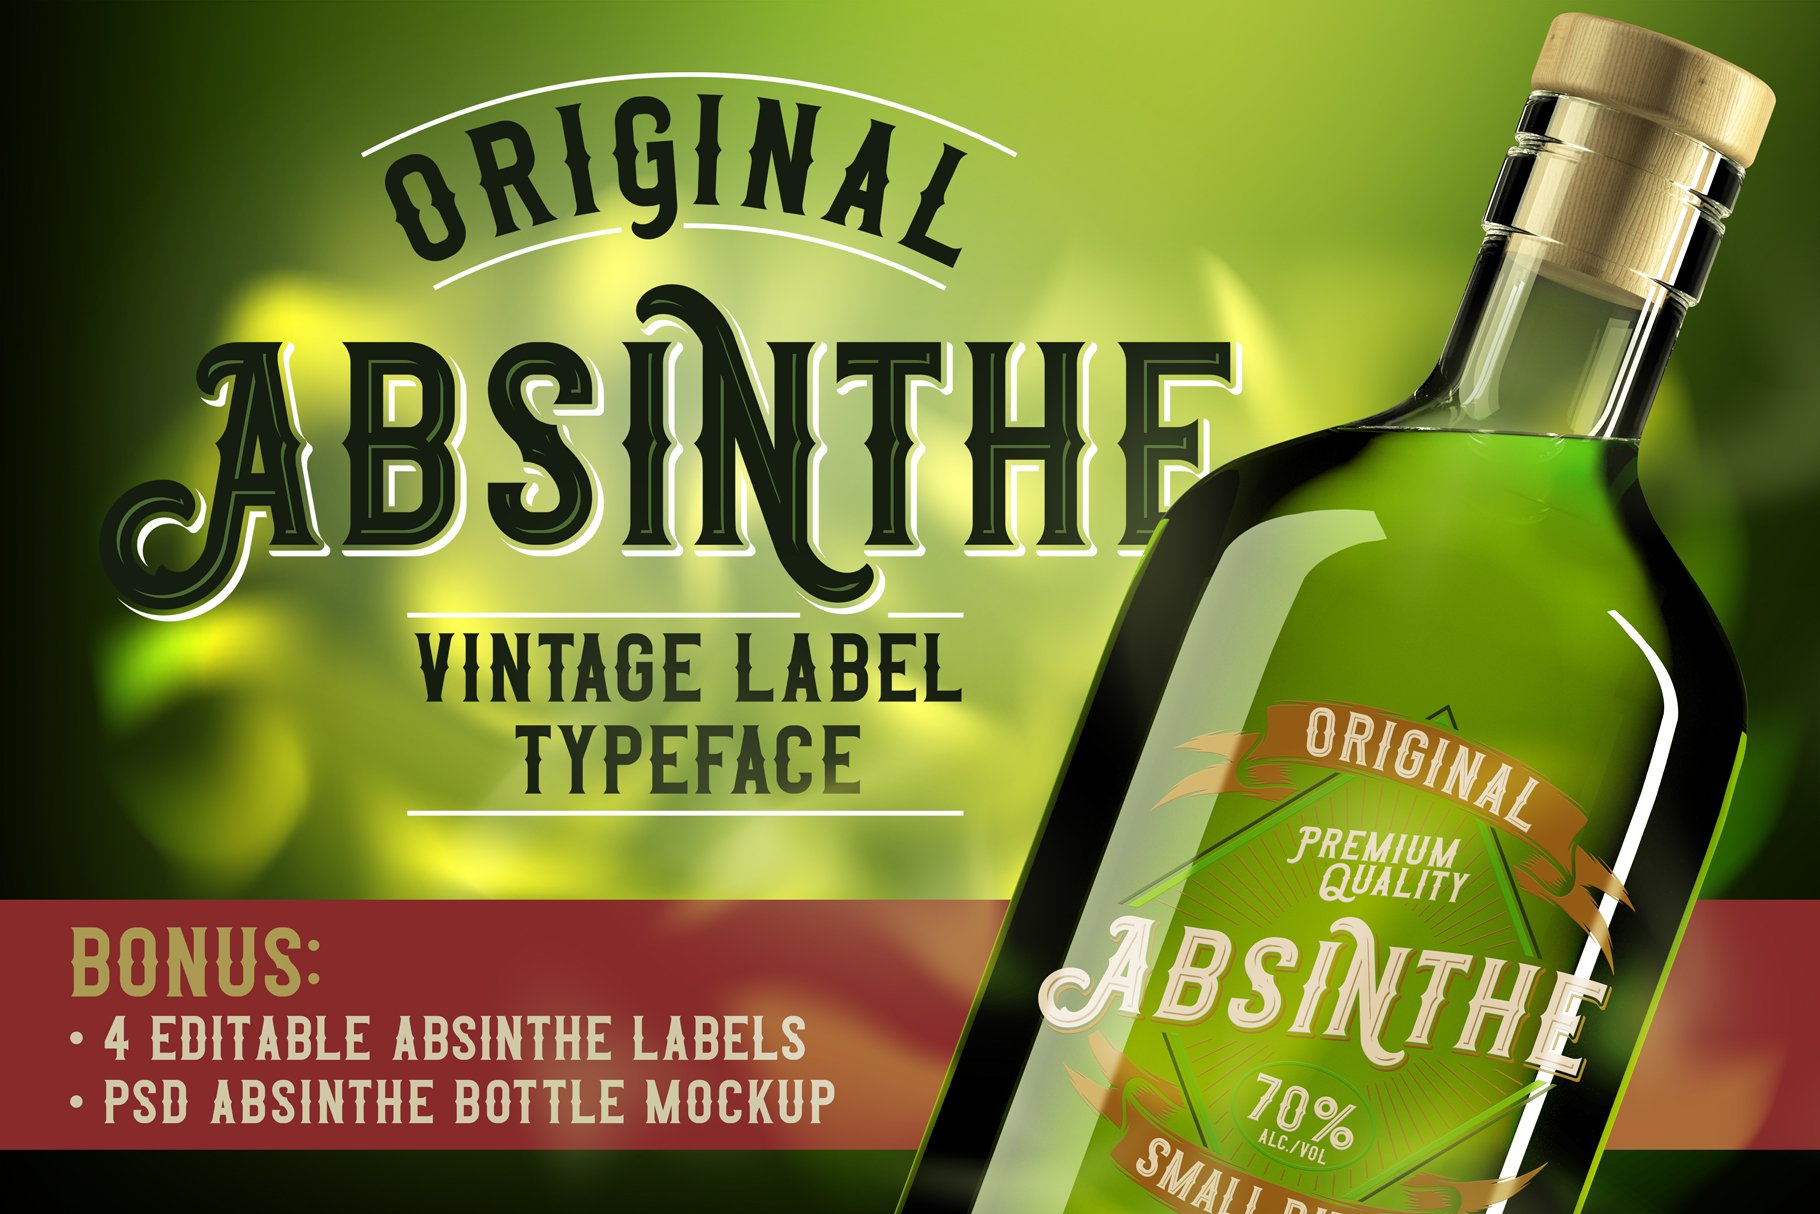 Original Absinthe Layered Font cover image.